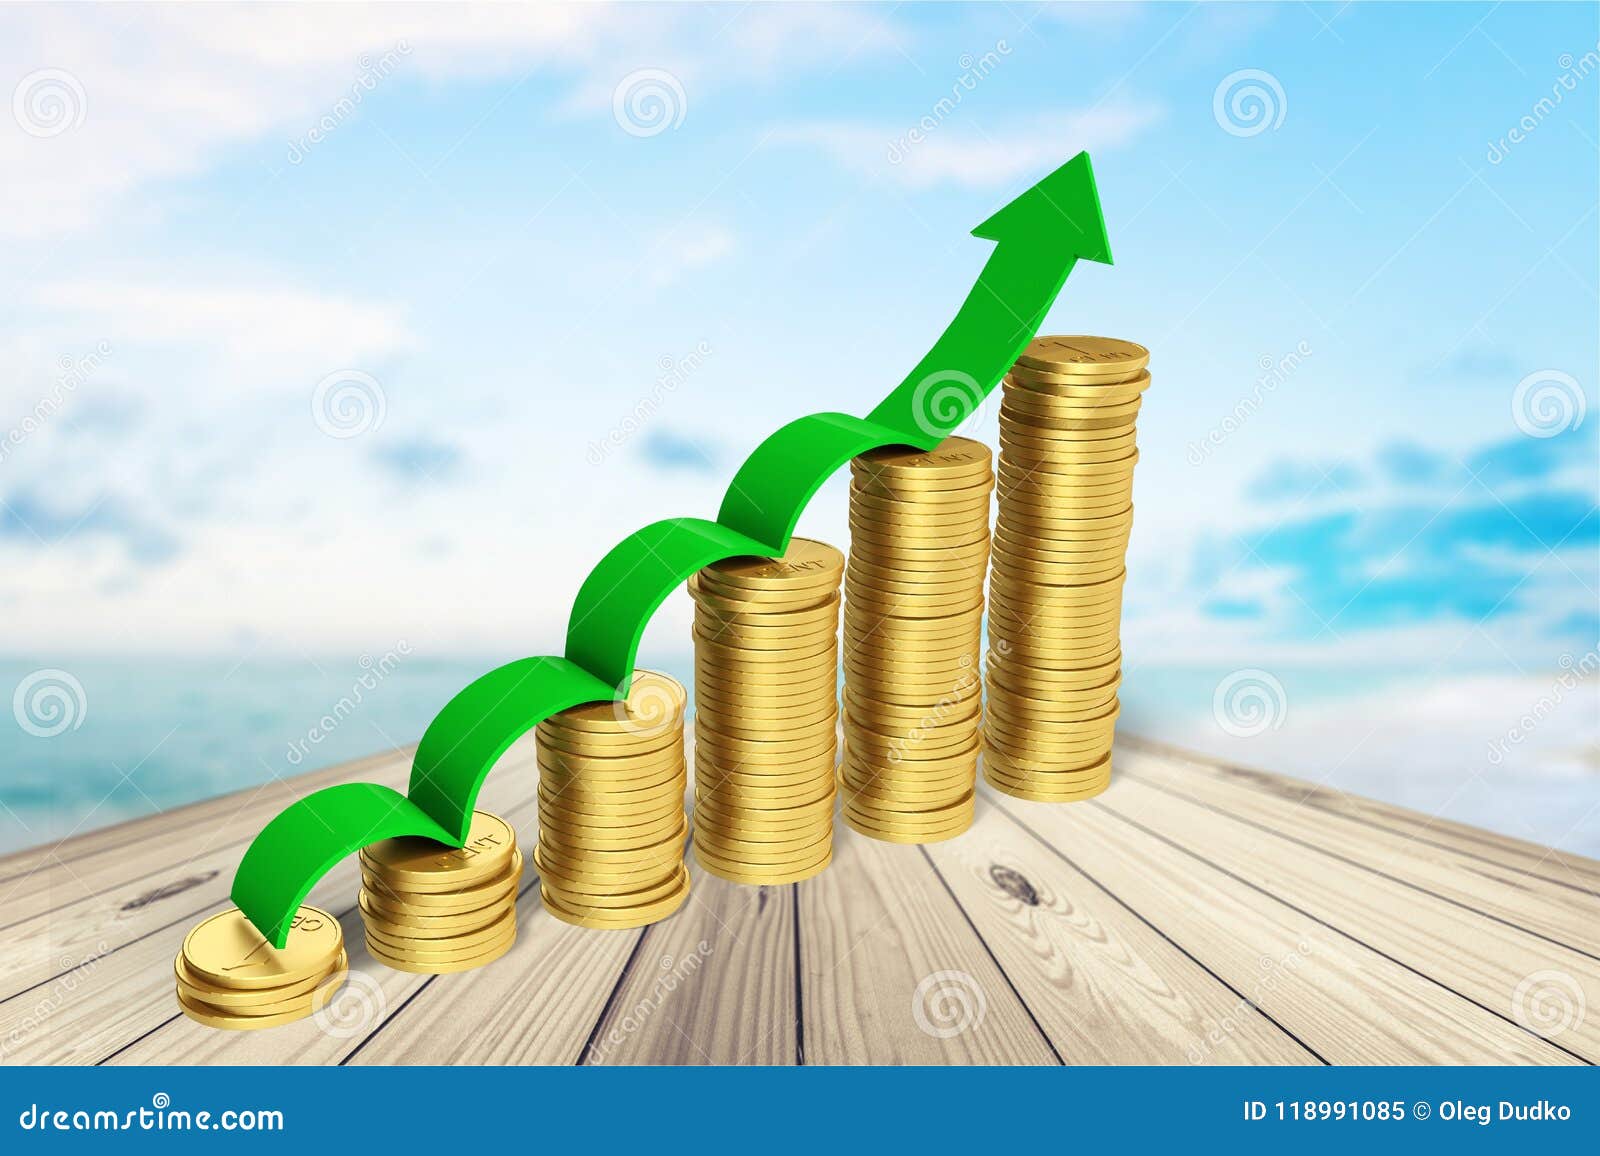 Making Money Stock Image Im!   age Of Growth Making Money 118991085 - 